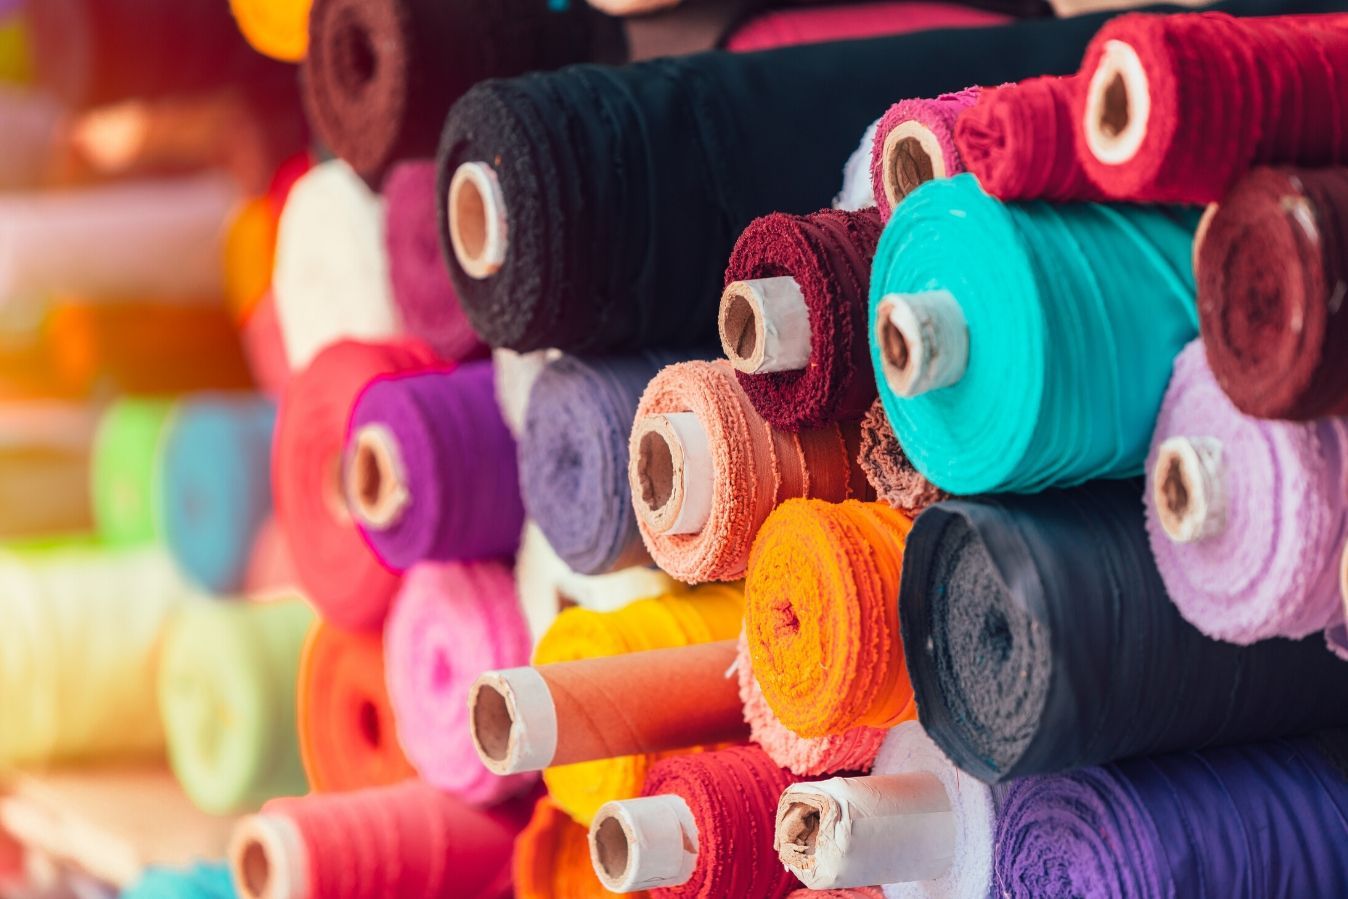 Global List of Denim Fabric Shops - The Last Stitch